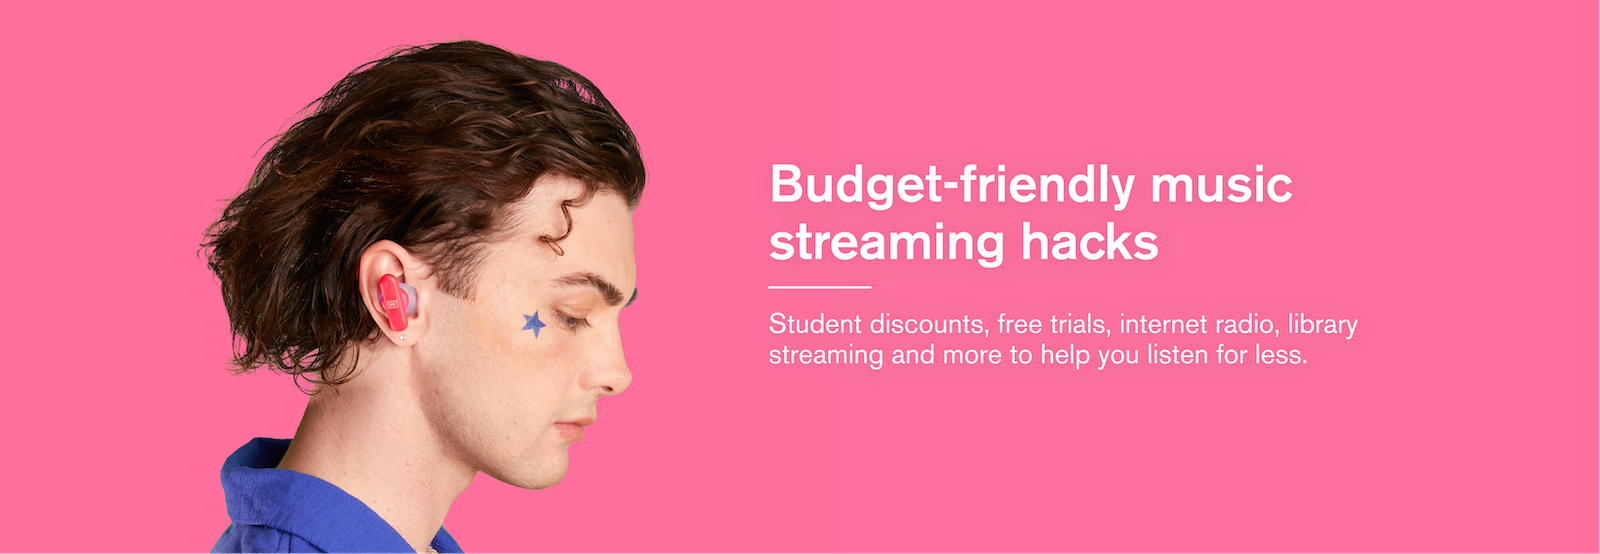 Budget-friendly music streaming hacks